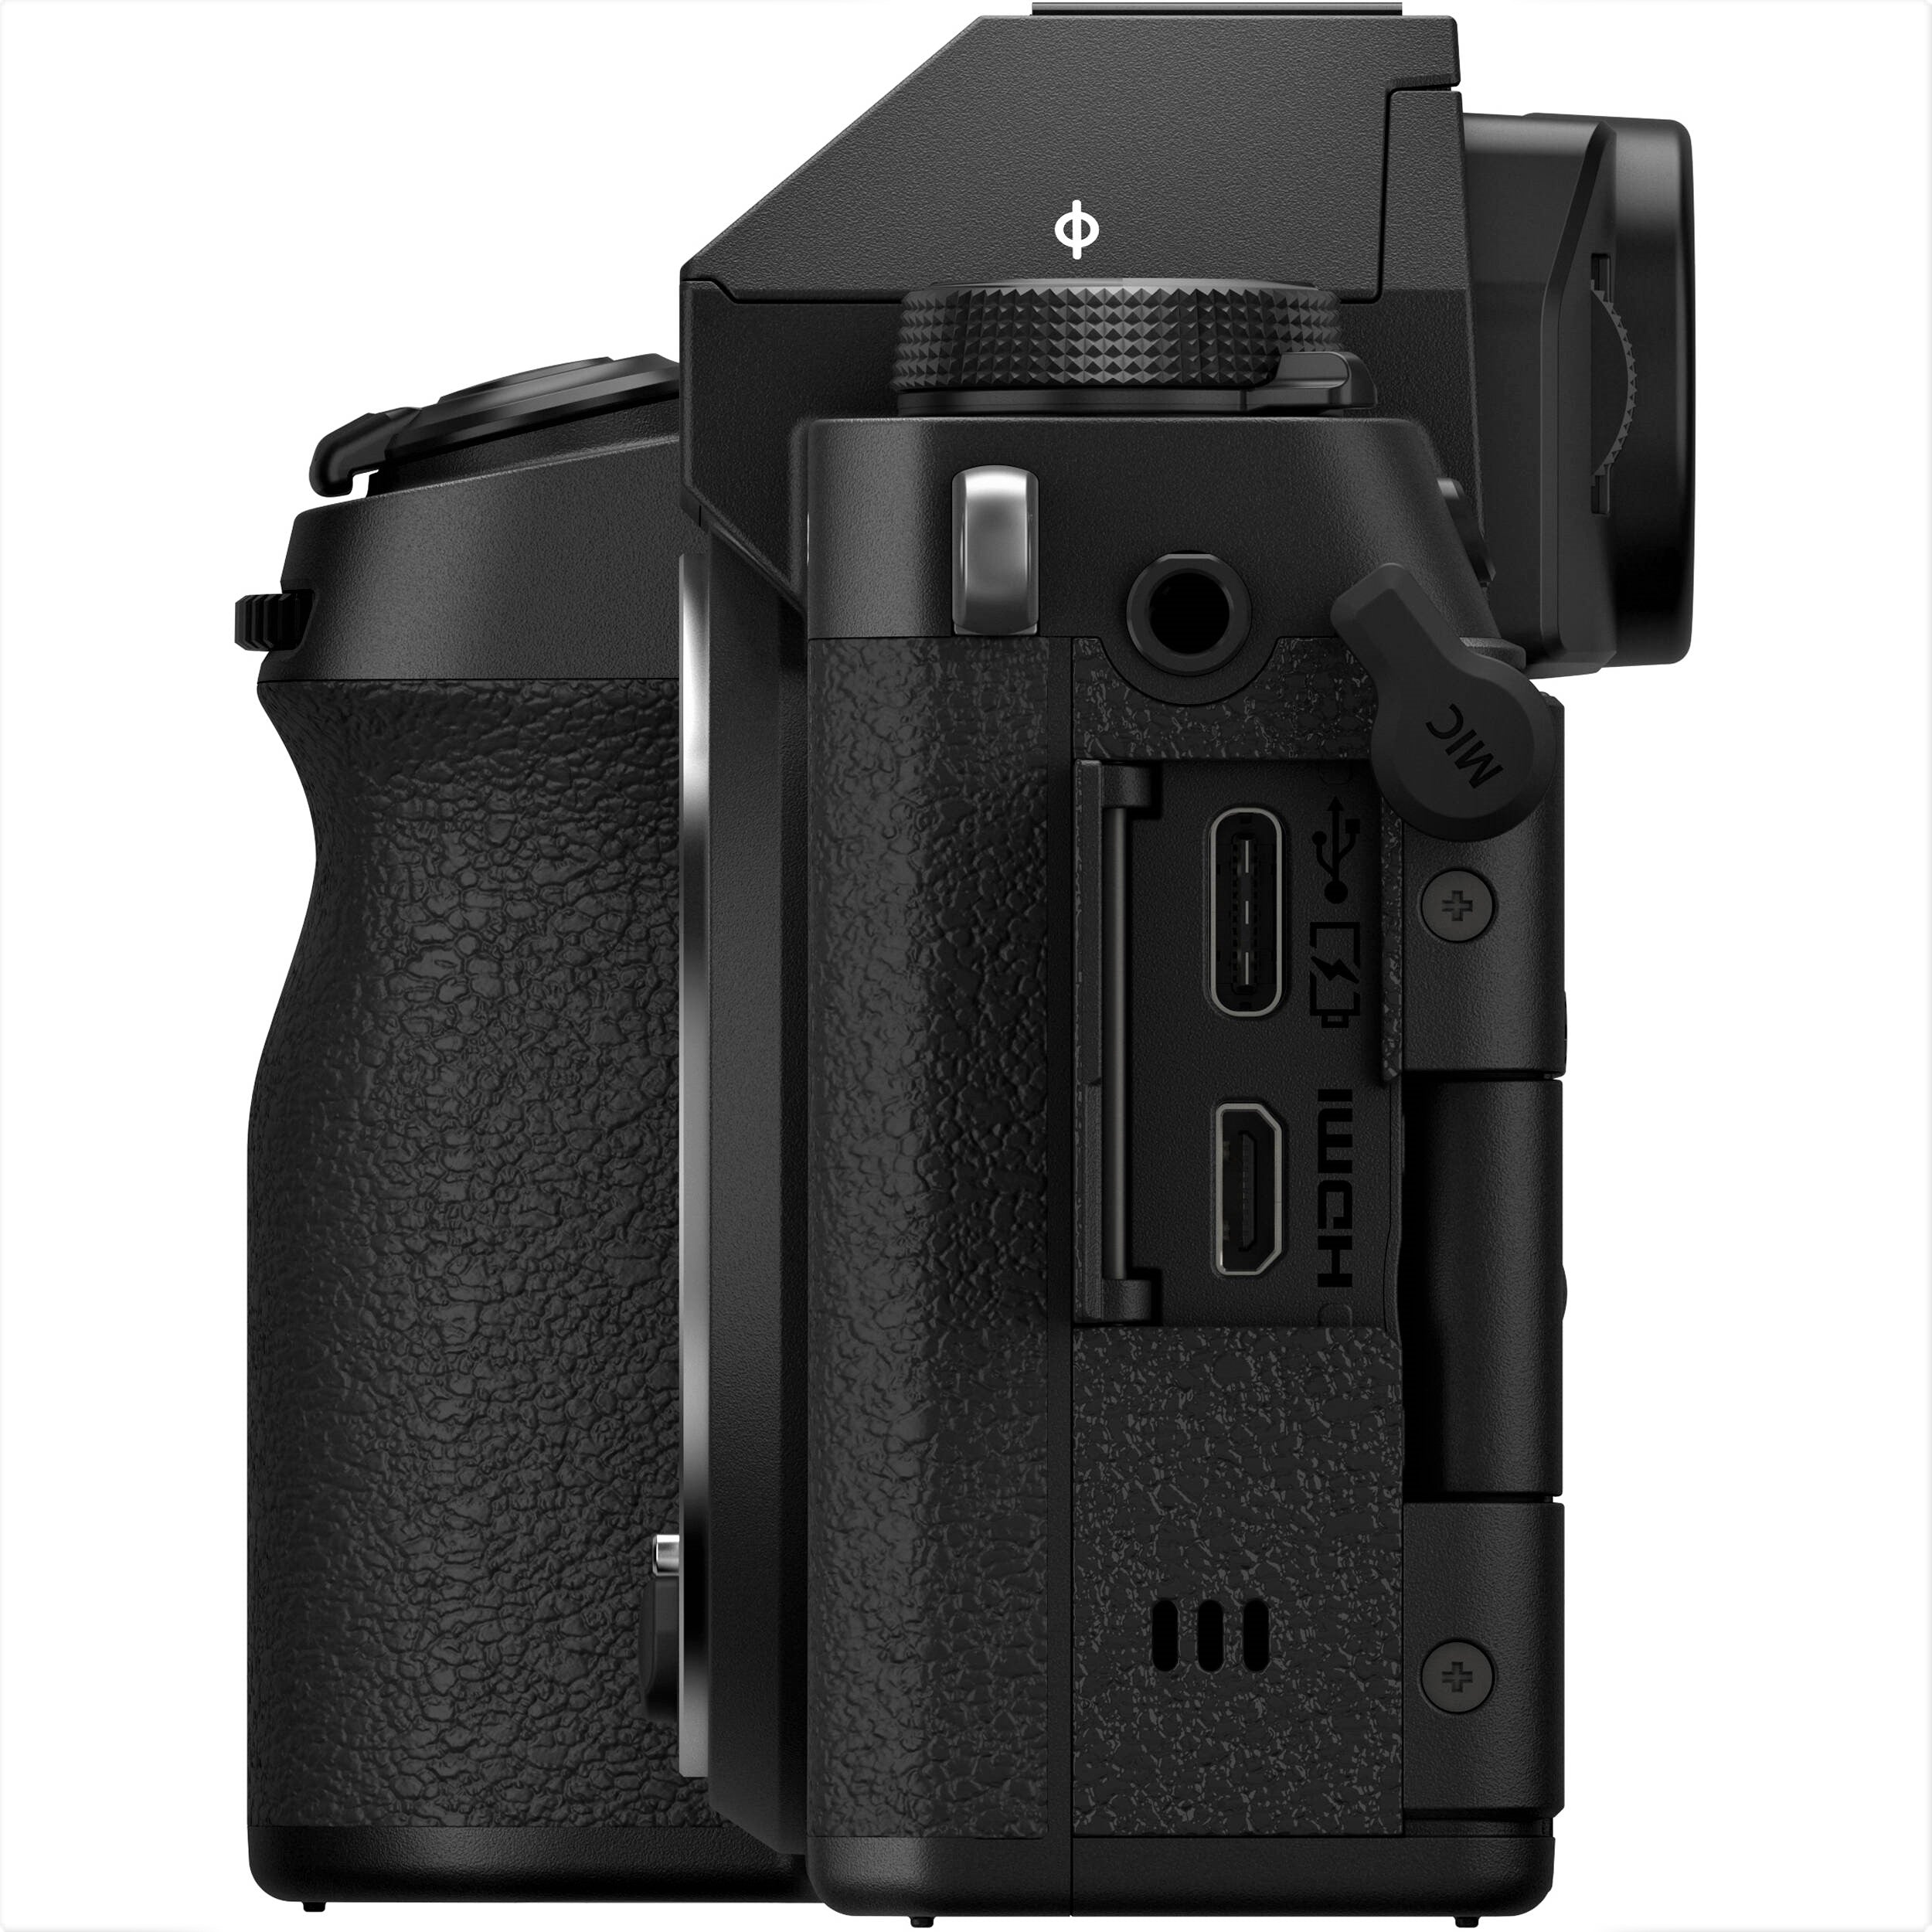 FUJIFILM X-S20 Mirrorless Camera (Black) - Side View